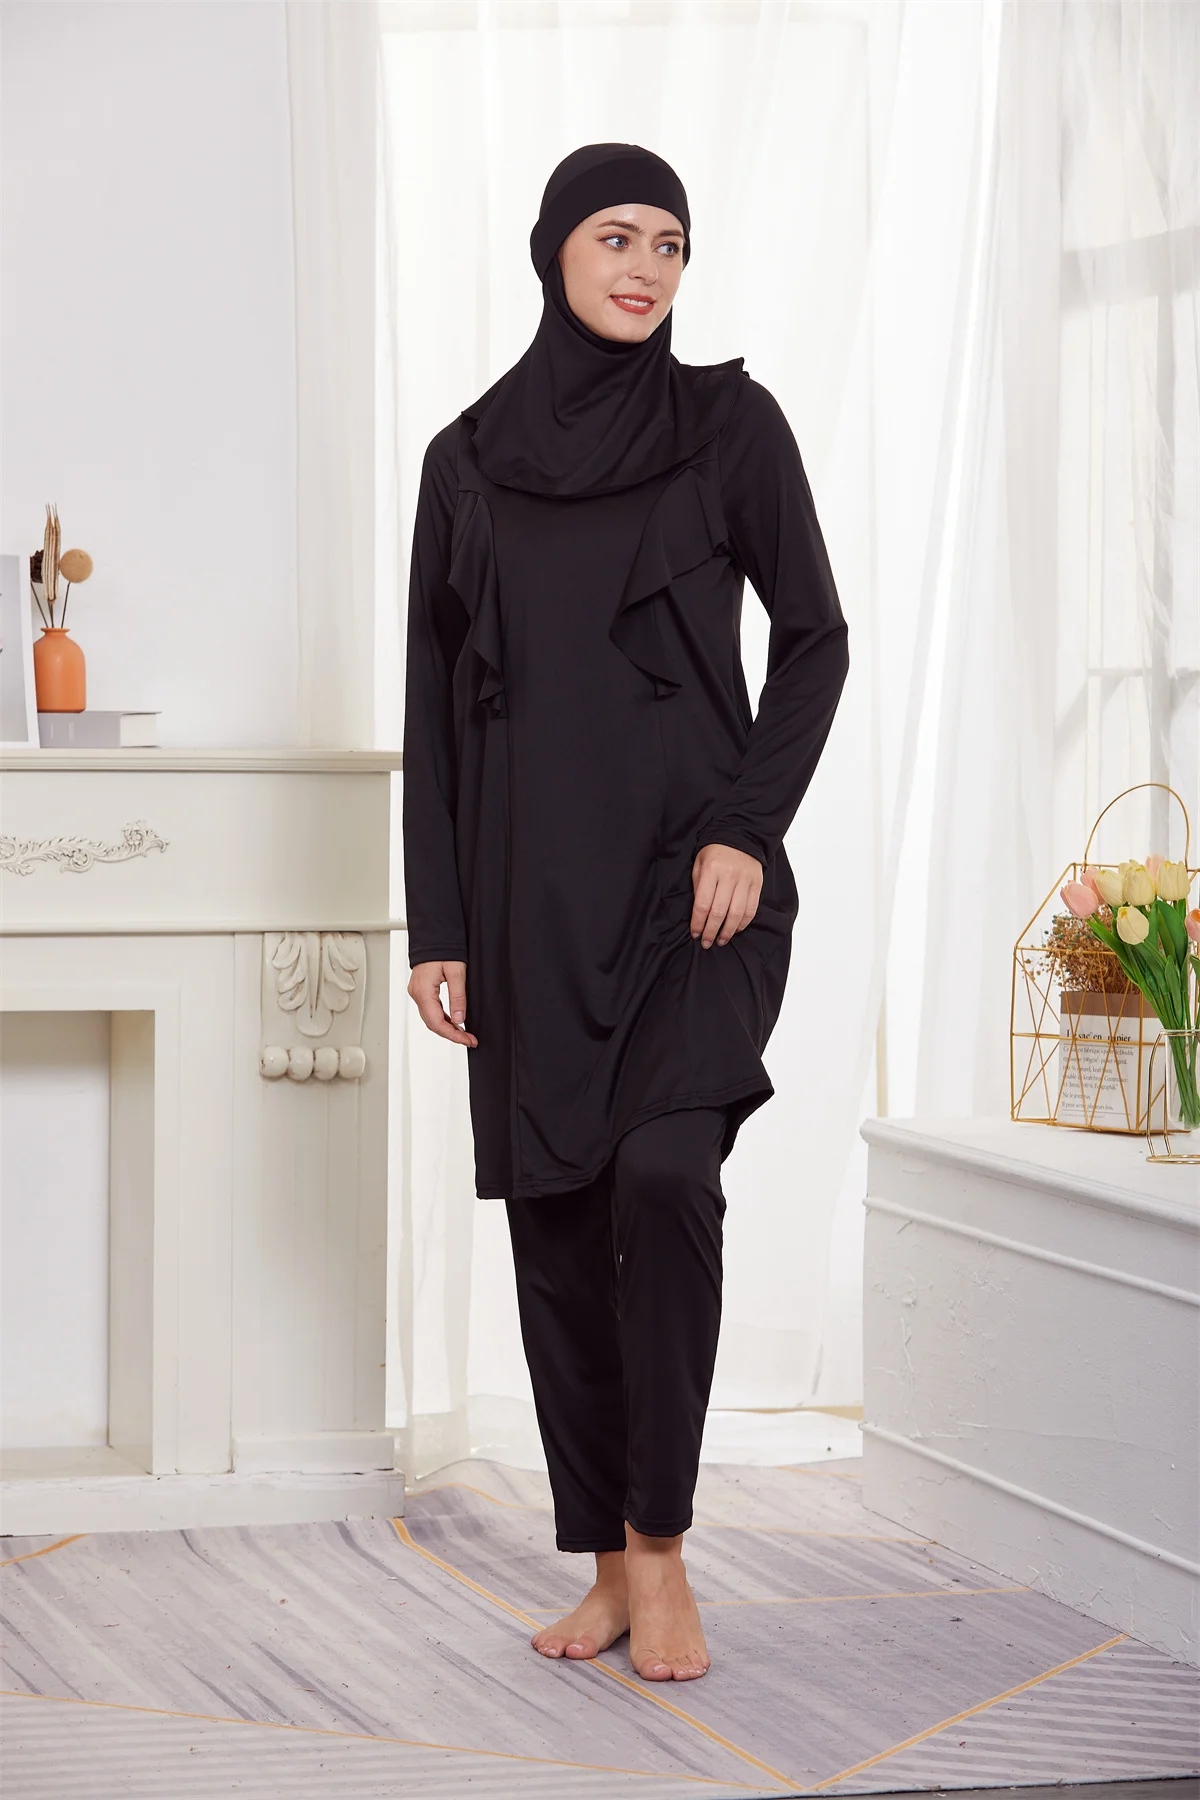 Modest Islamic Swimwear Arab Full Cover Swimsuits Sports Beach Wear Muslim Women Black Dress Burkinis Bathing Wear 3 Pcs Sets